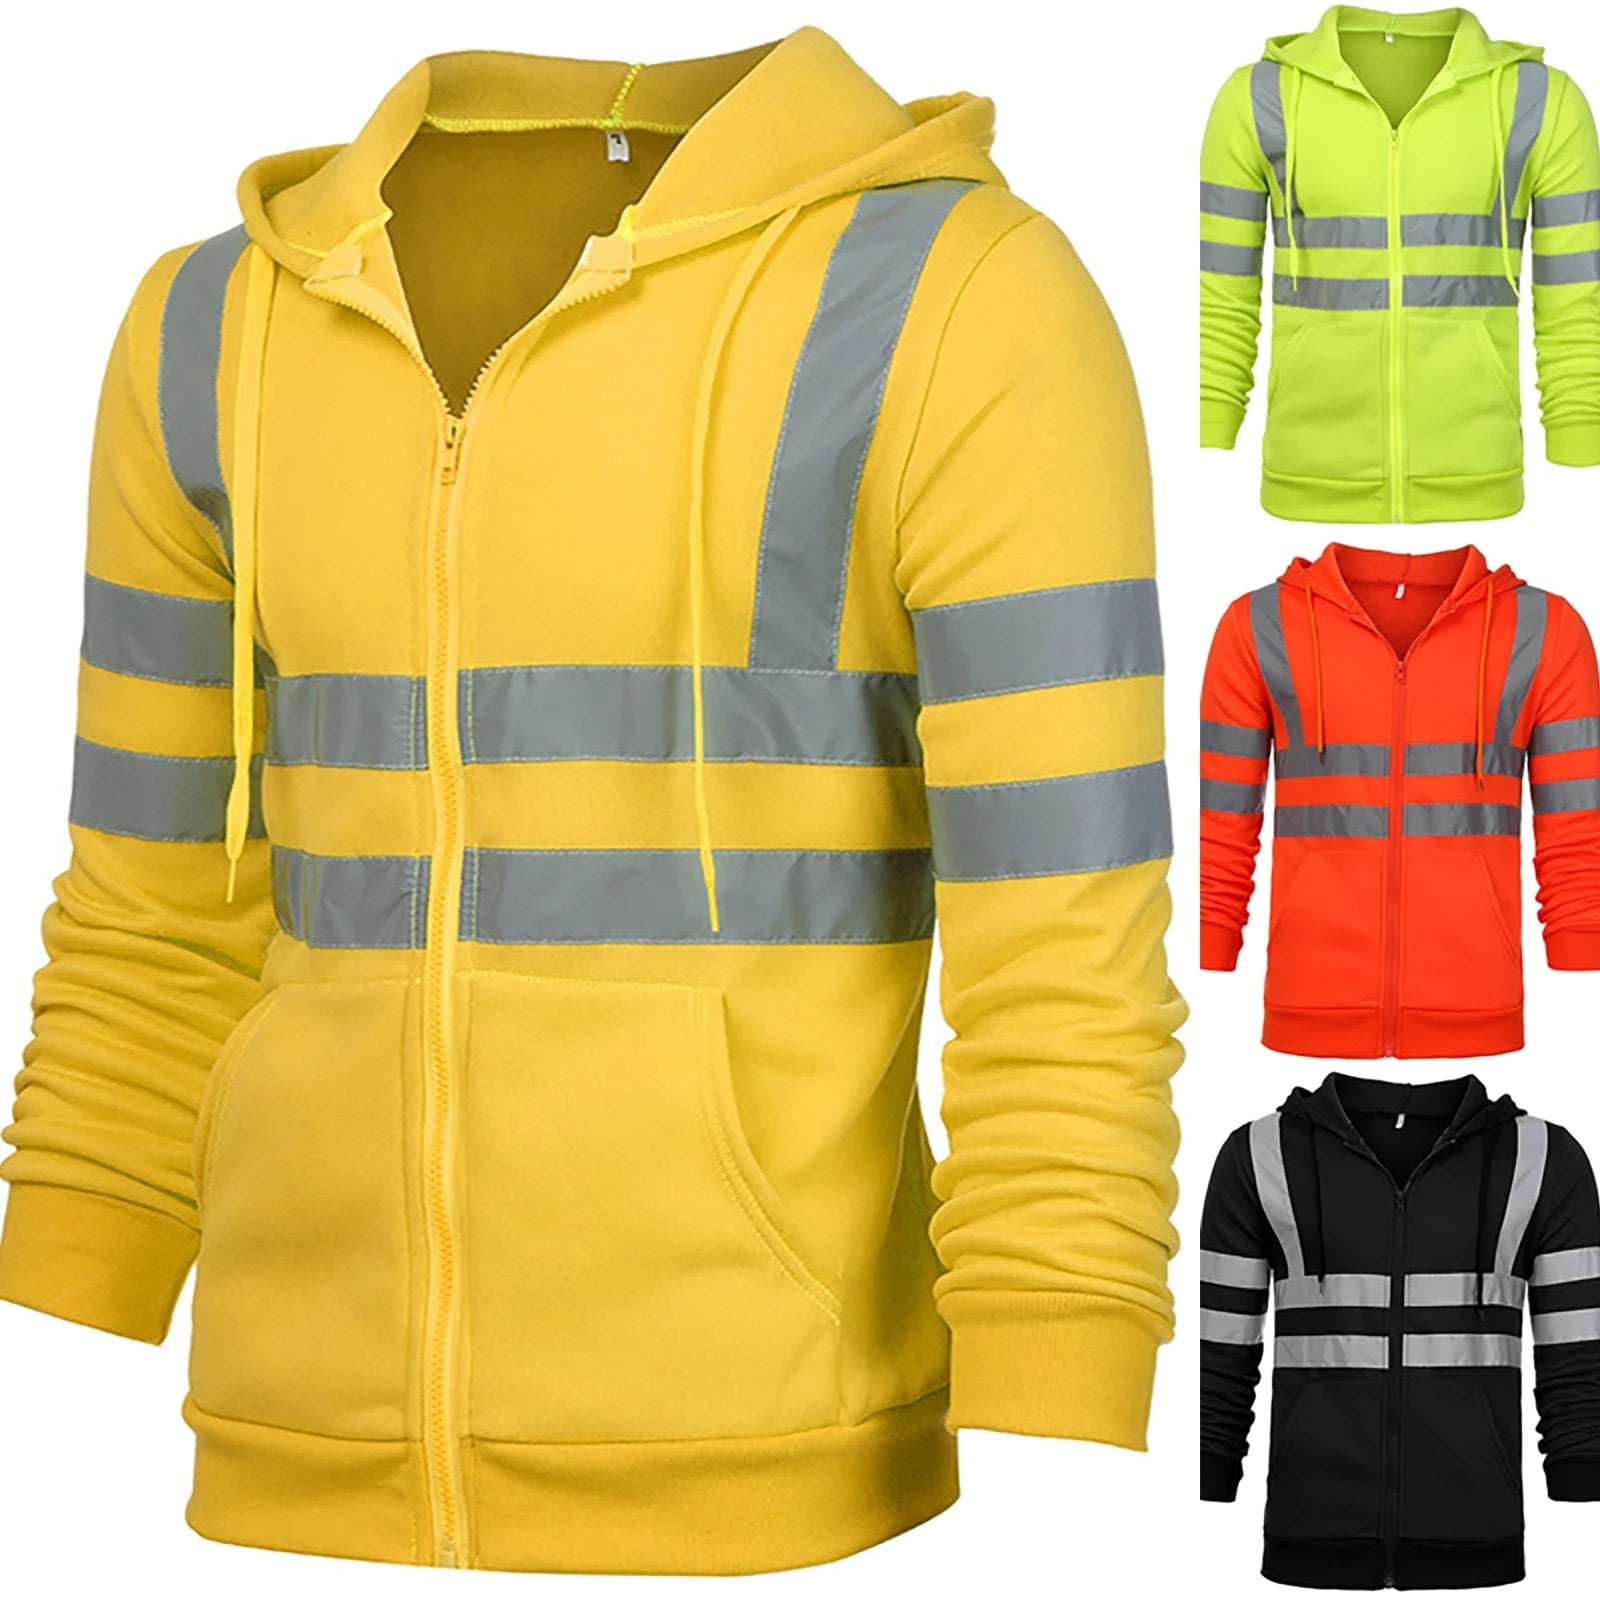 YSK HOODIE1: Men's Safety Reflective Zipper Sweatshirt - YSK (You Should Know) Safety